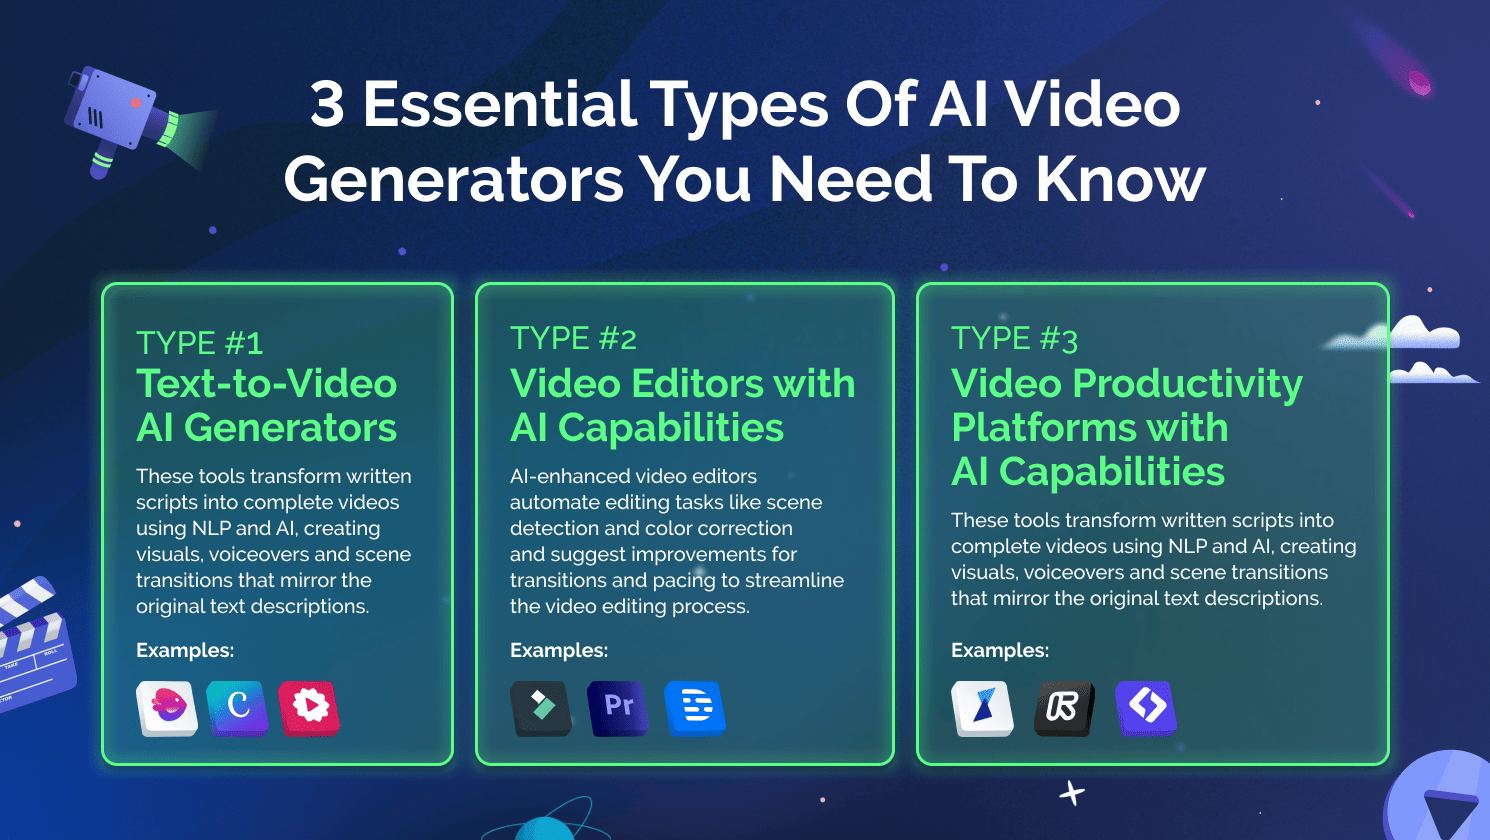 Types of AI Video Generators